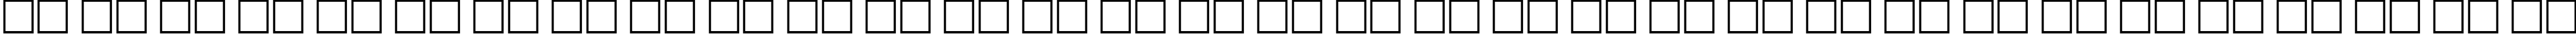 Пример написания русского алфавита шрифтом Time Roman90n